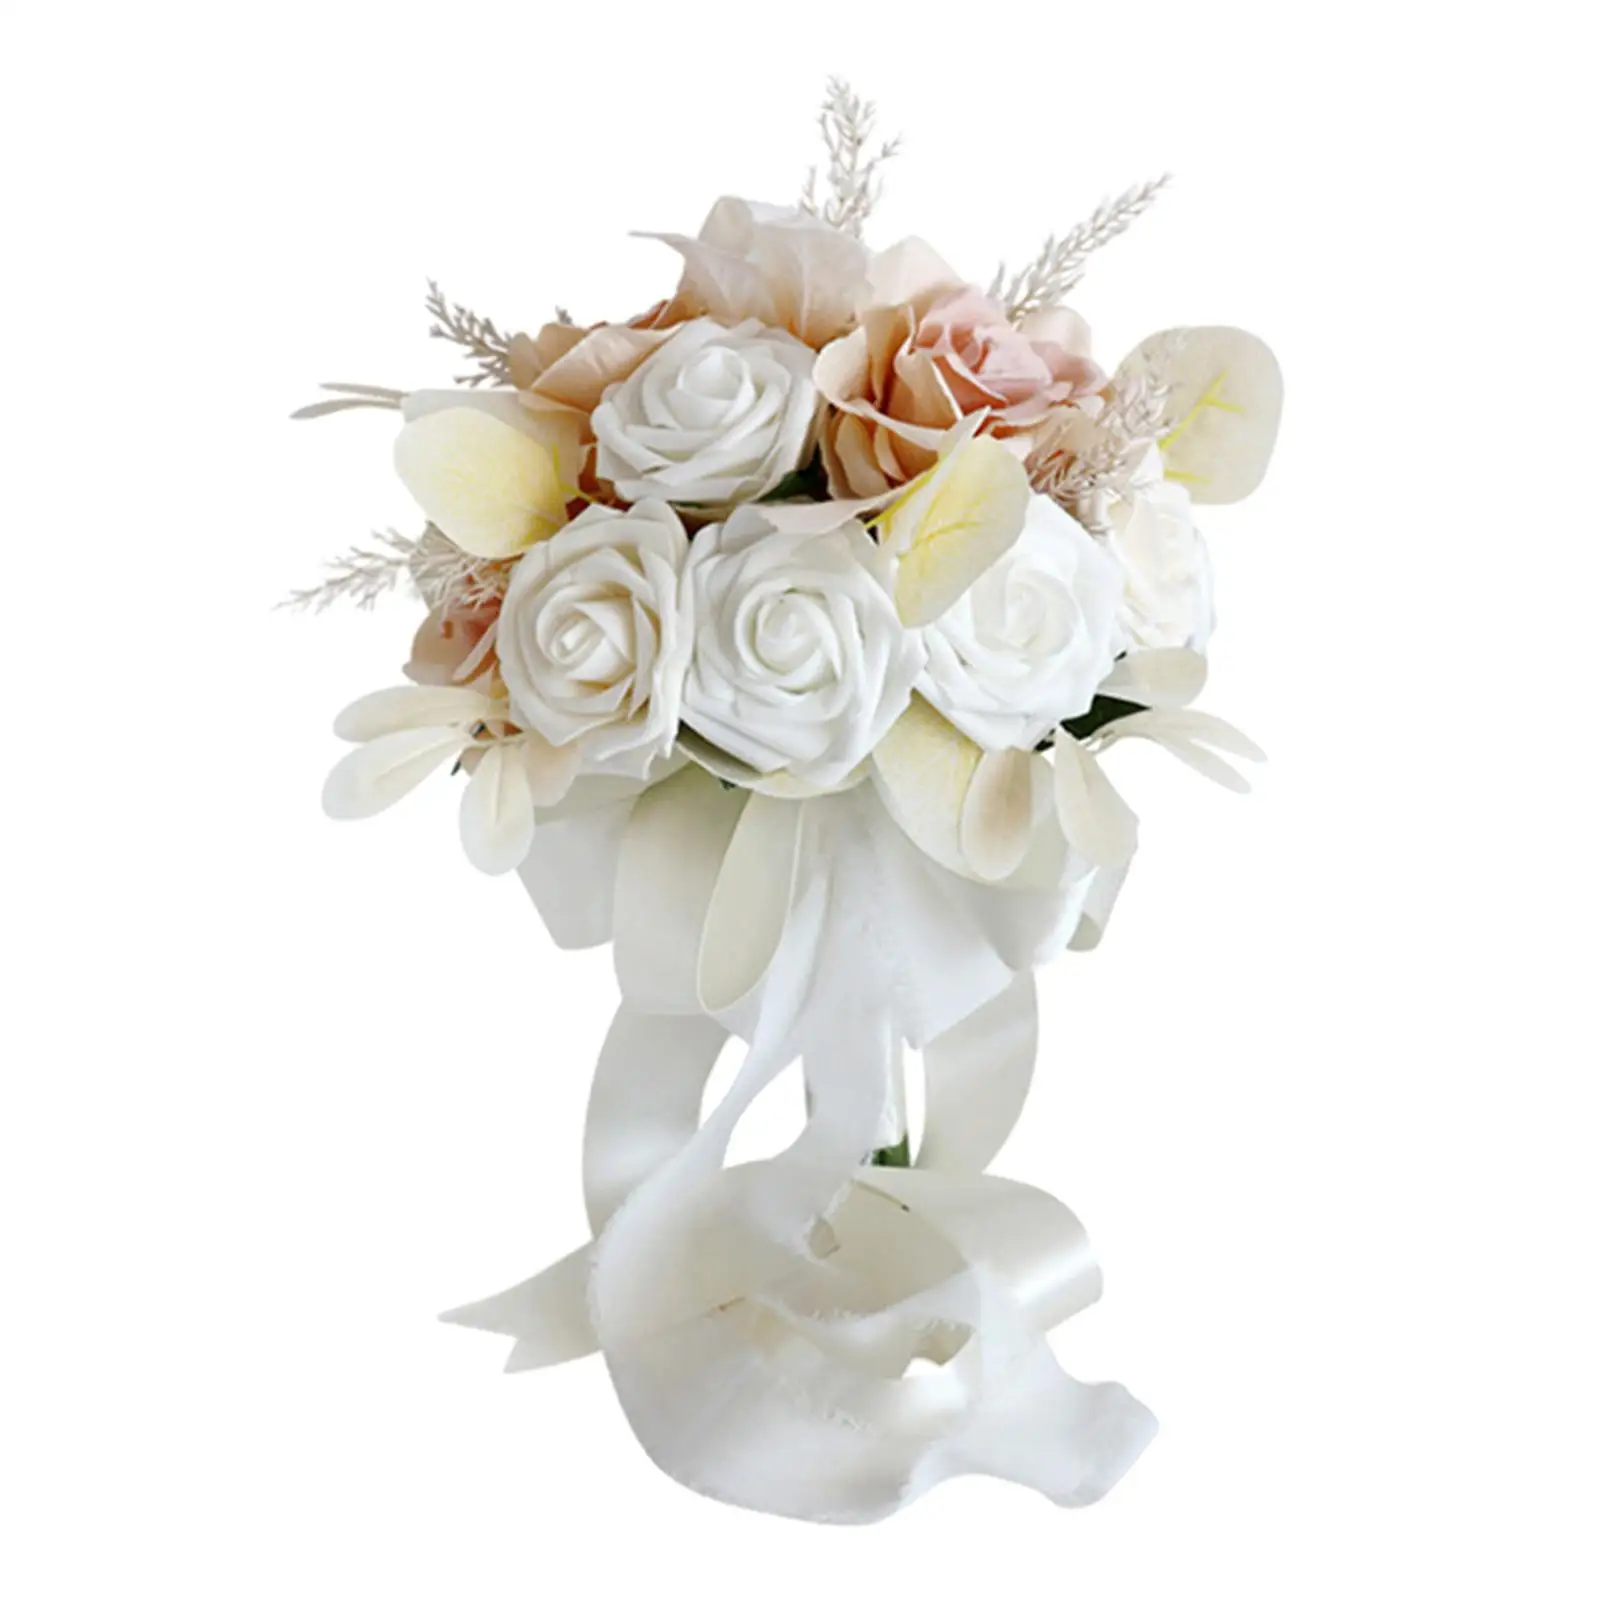 Bridal Bouquet Centerpiece Elegant 22cmx30cm Artificial Flowers Decoration for Anniversary Wedding Party Bridal Shower Ceremony